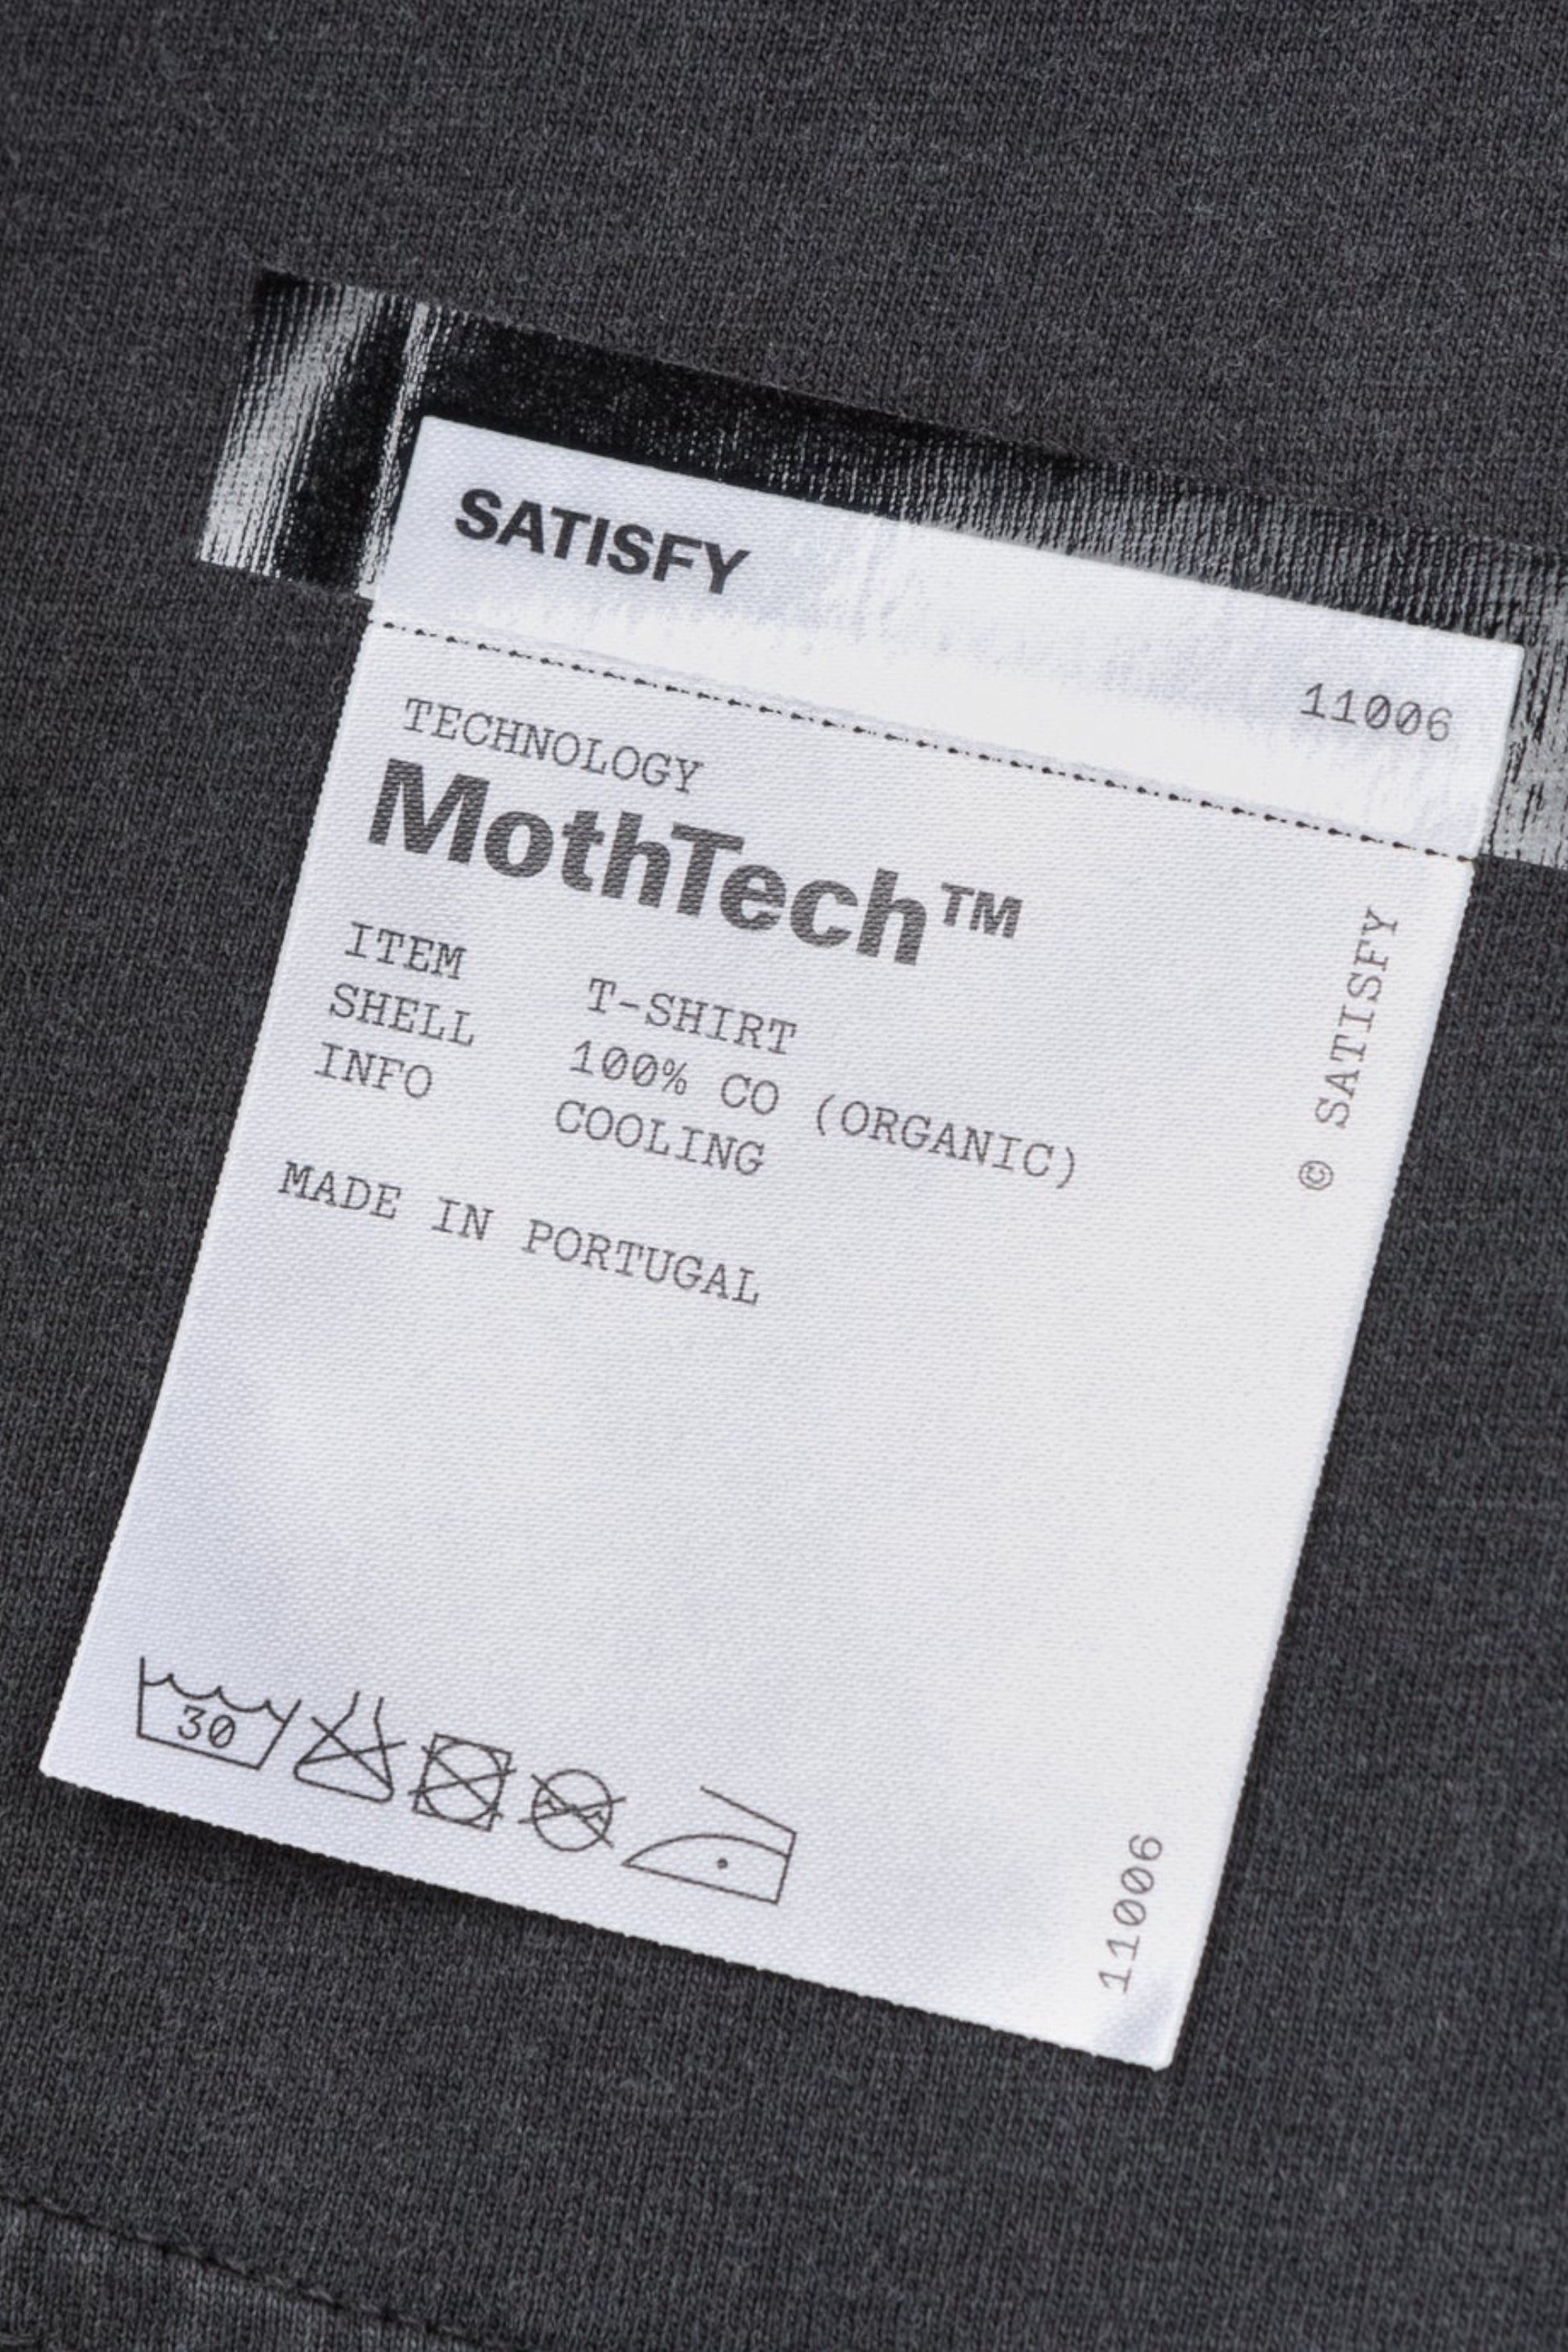 Satisfy - MothTech™ T-Shirt (Aged Black)